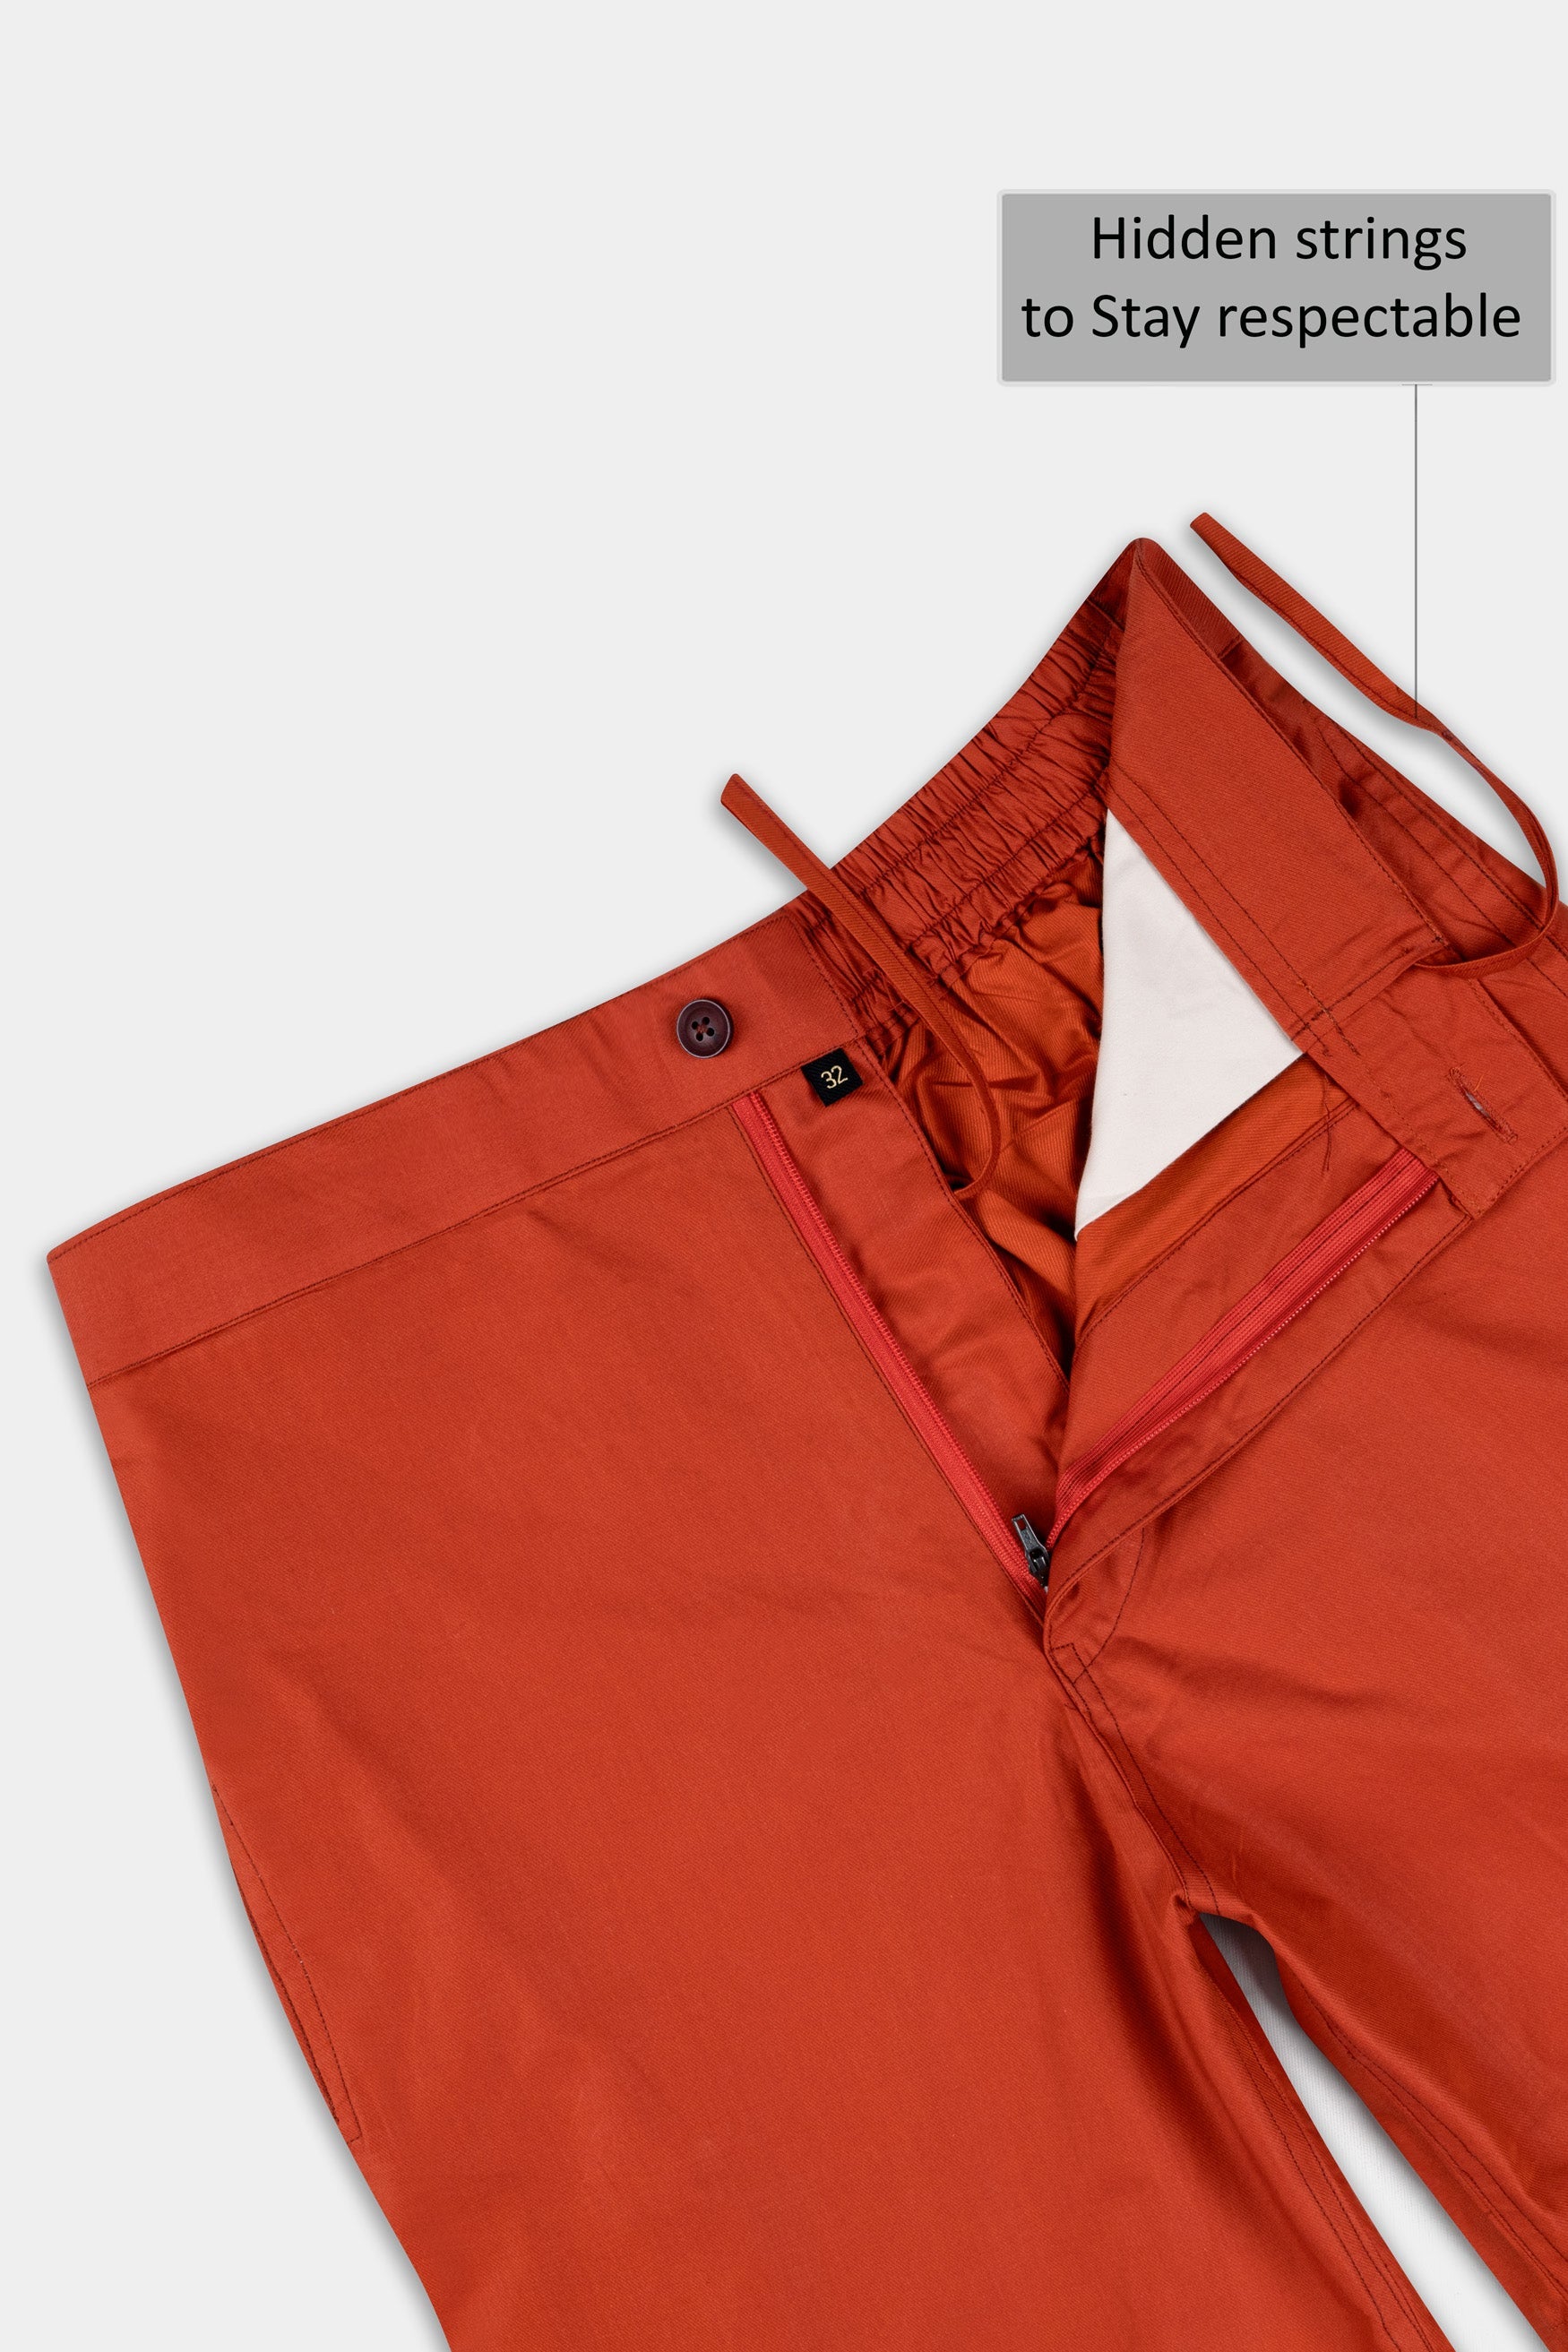 Orioles Orange Twill Premium Cotton Shorts SR390-28, SR390-30, SR390-32, SR390-34, SR390-36, SR390-38, SR390-40, SR390-42, SR390-44